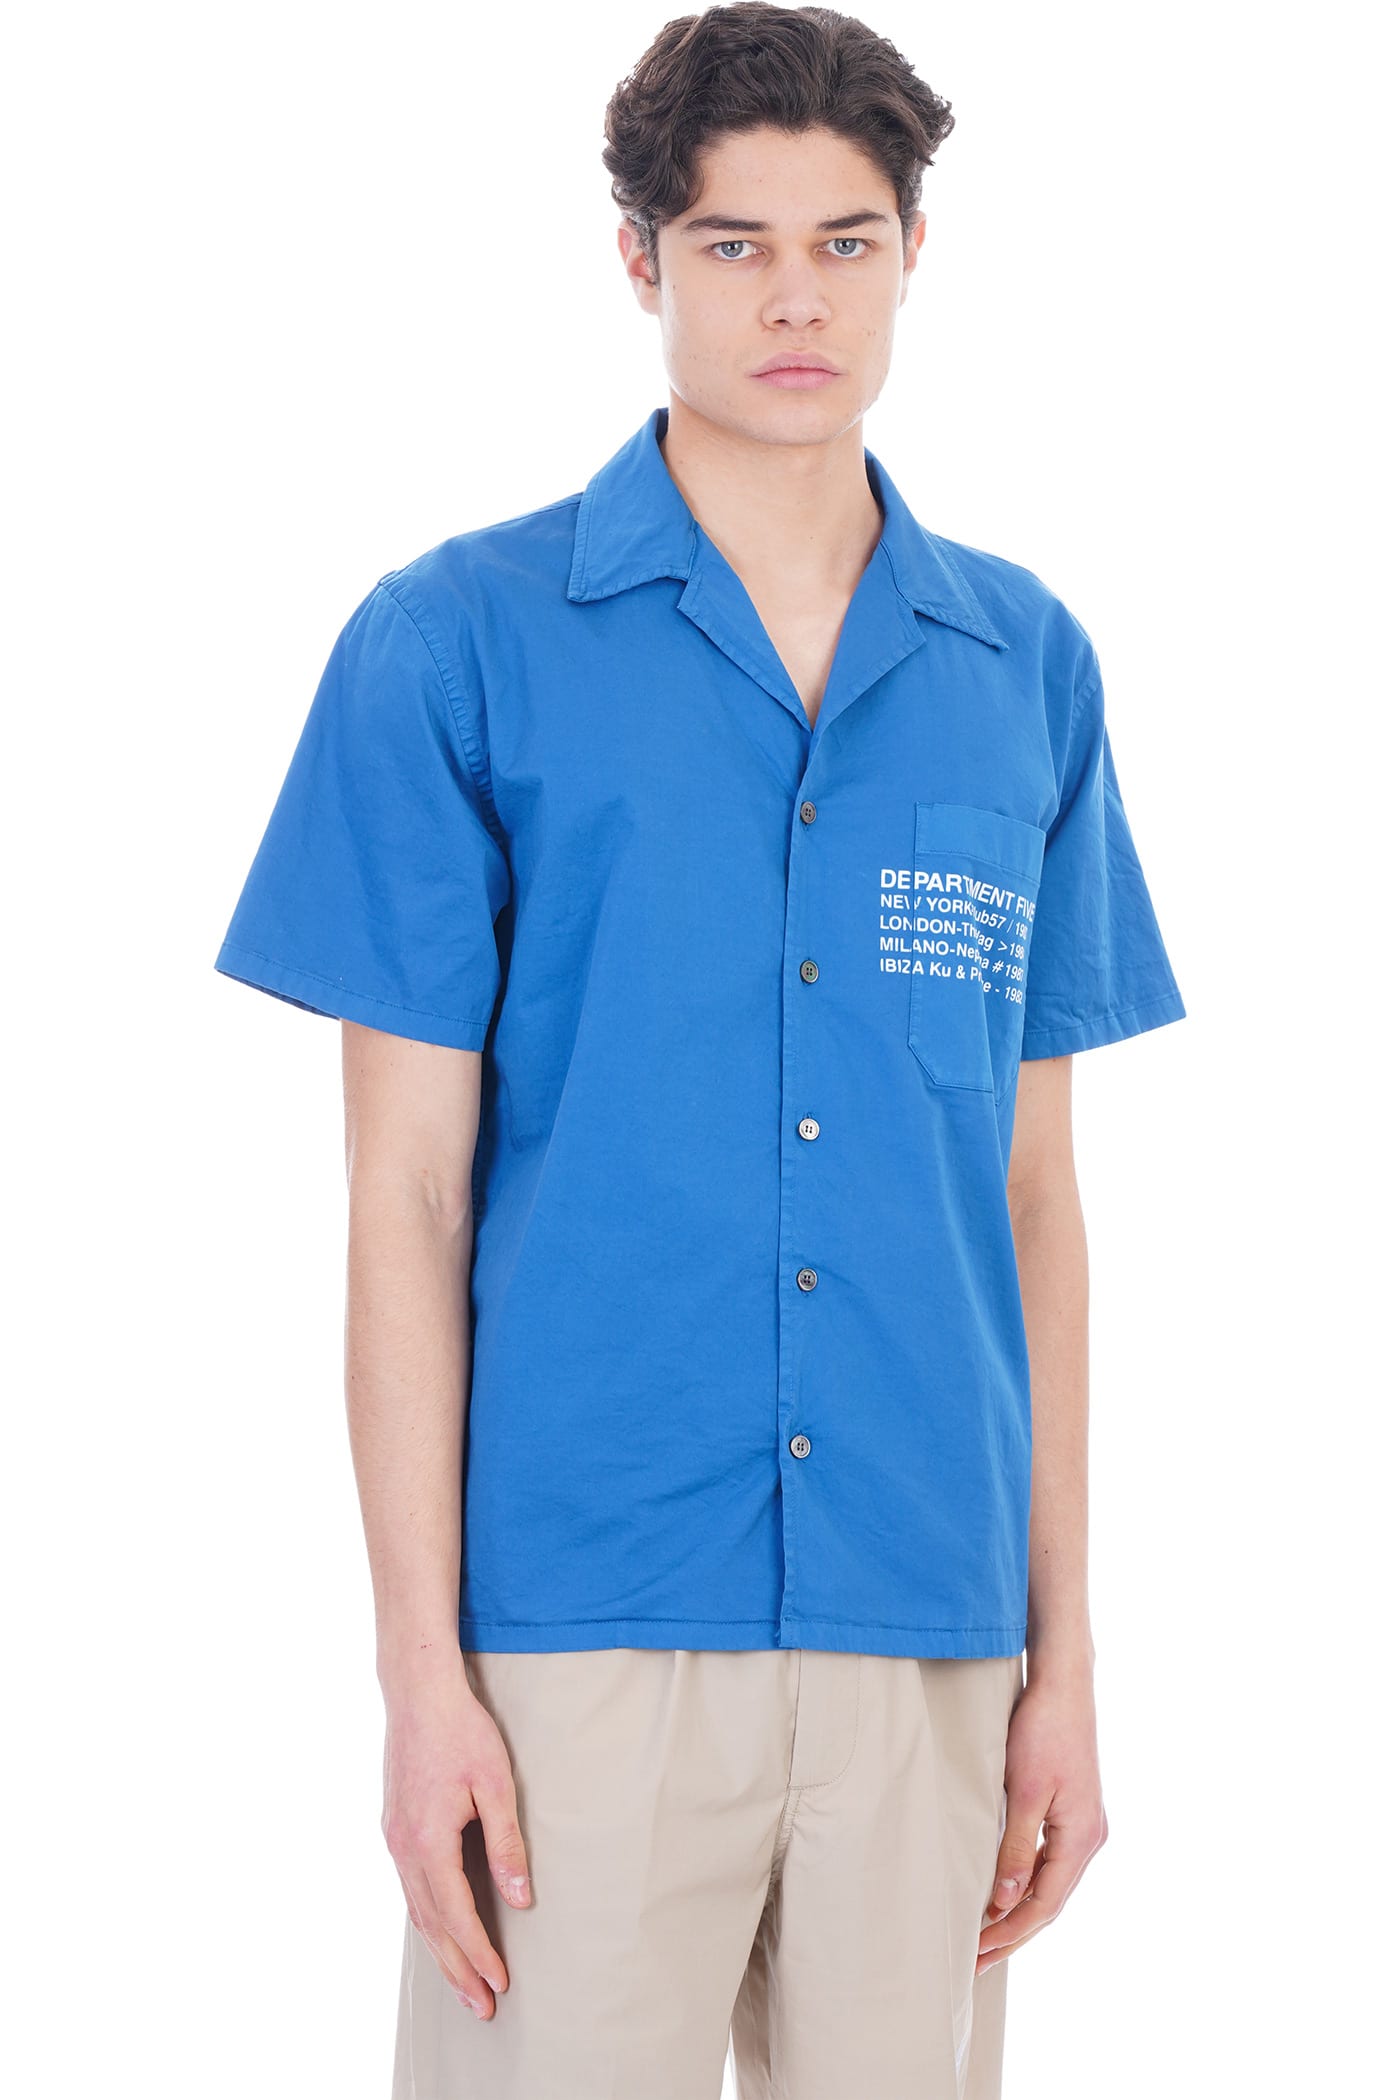 Department Five Digital Shirt In Blue Cotton